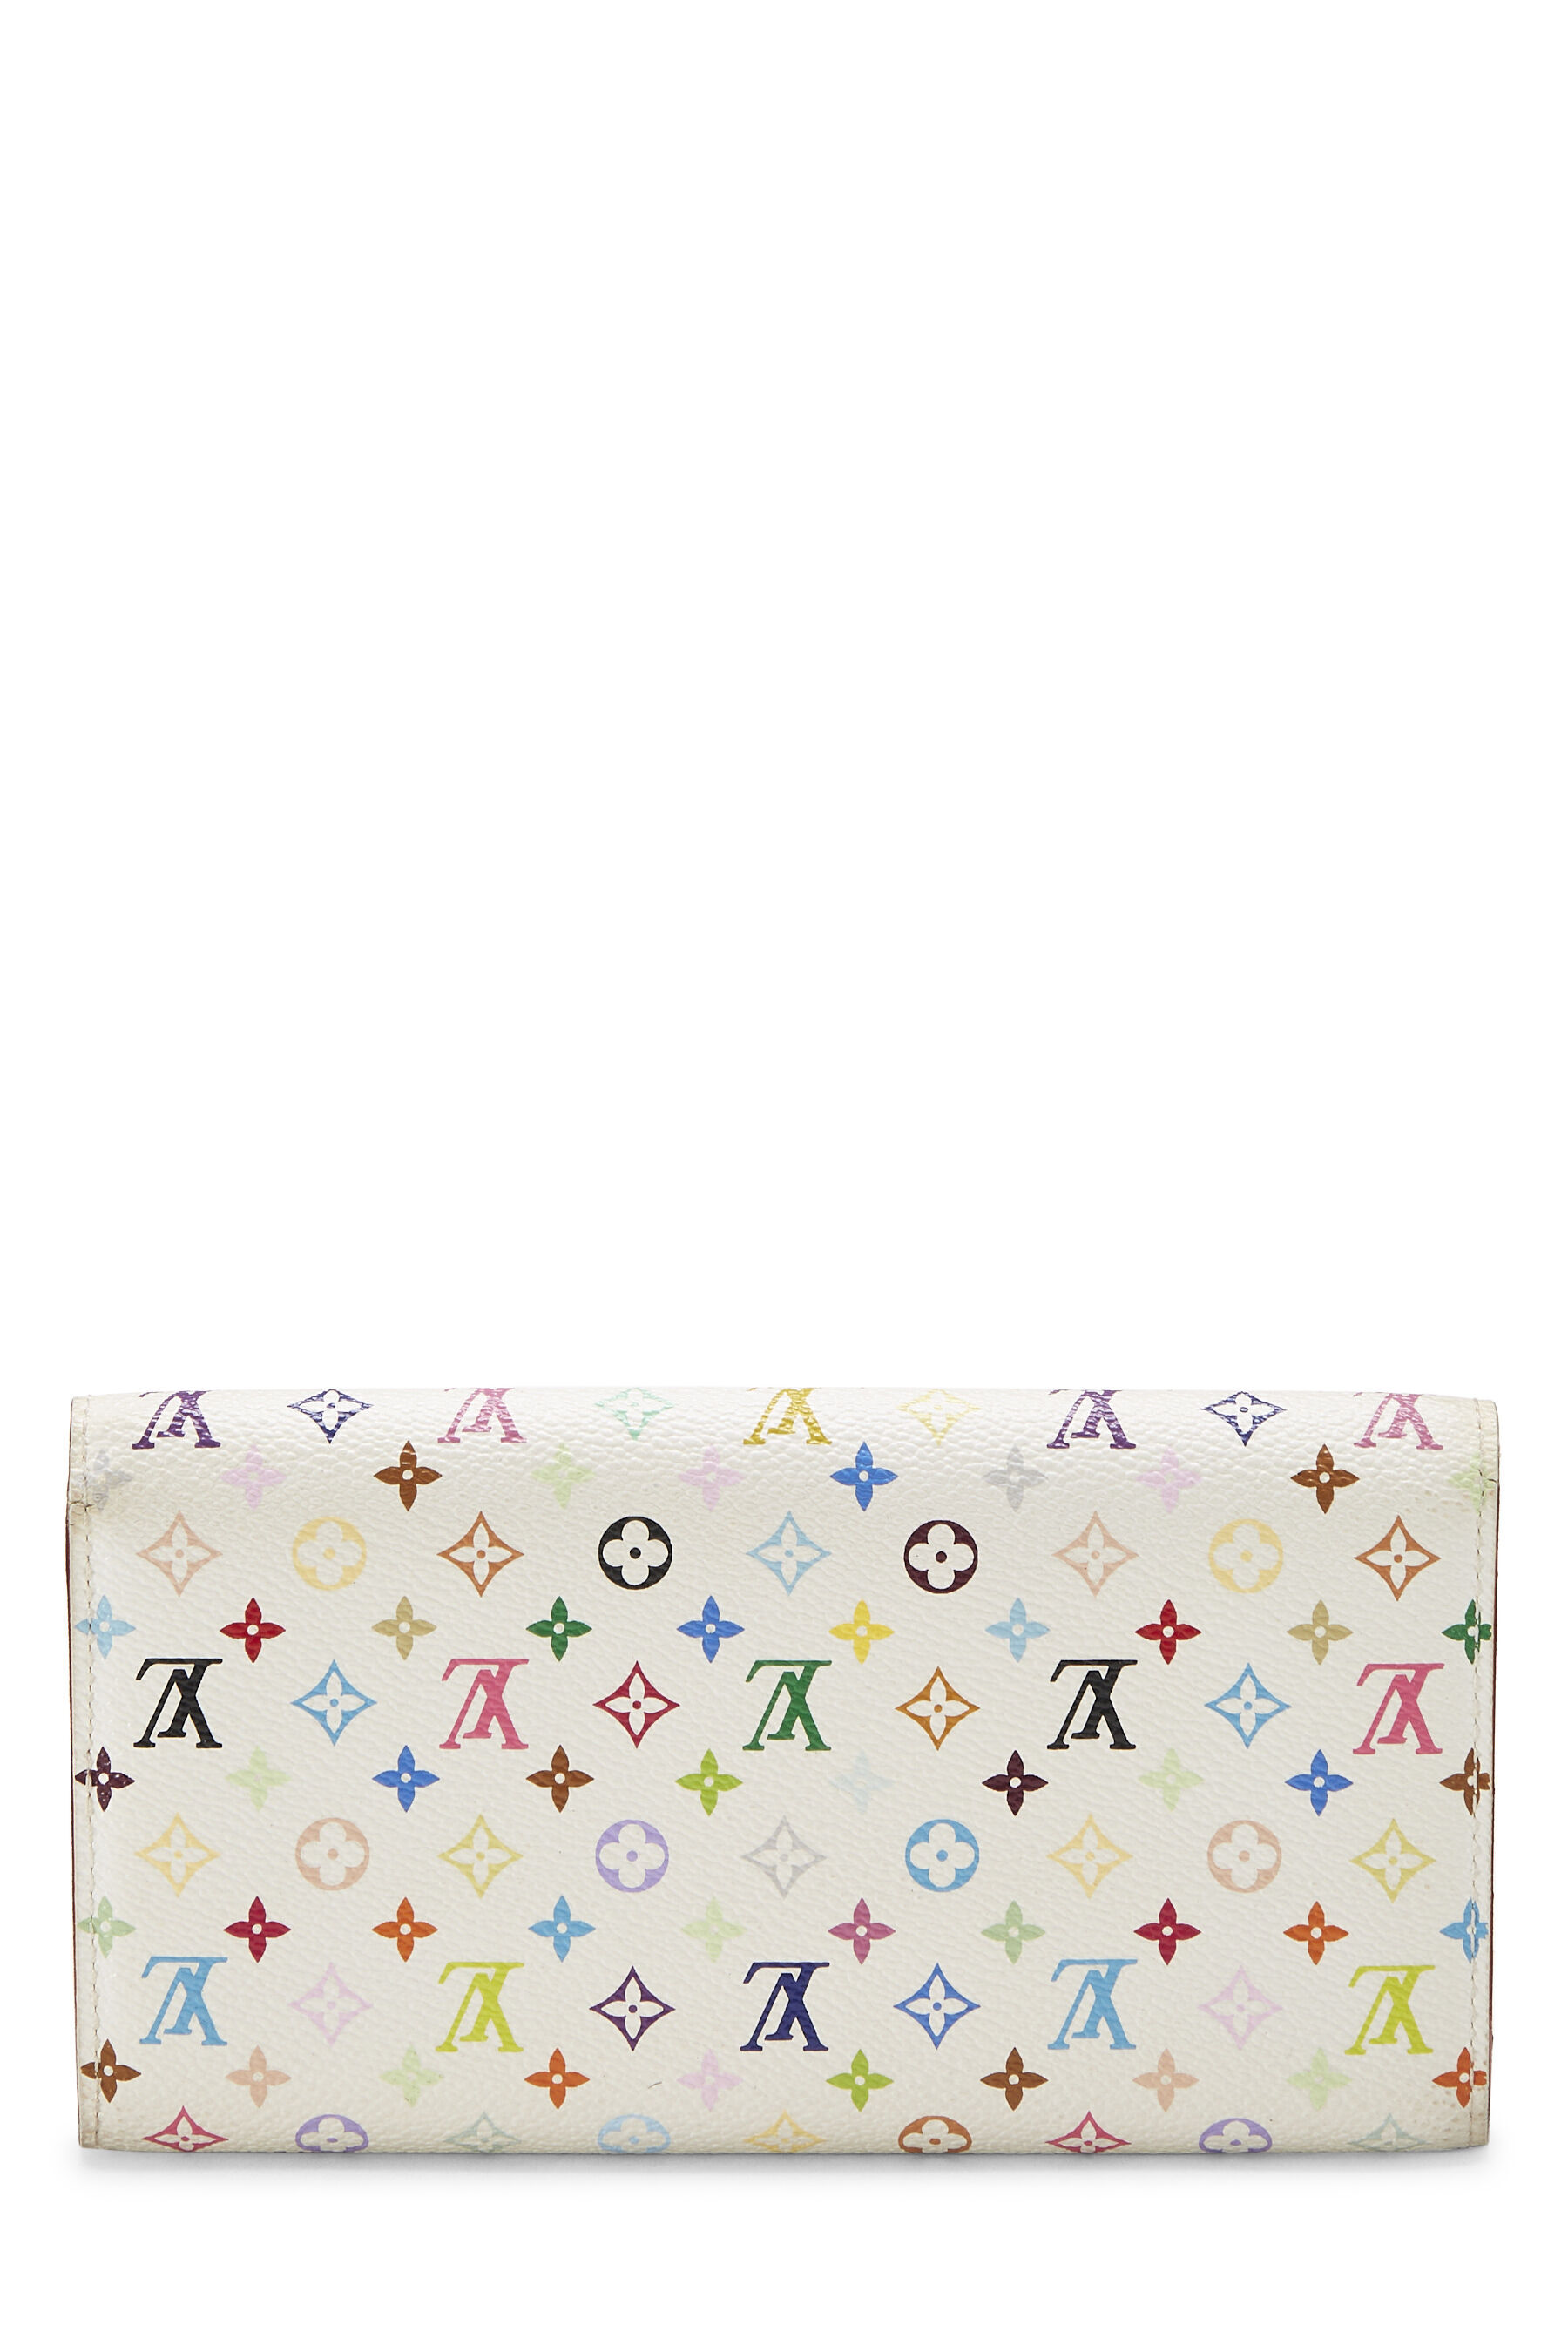 Louis Vuitton Multicolor Wallets for Women for sale  eBay